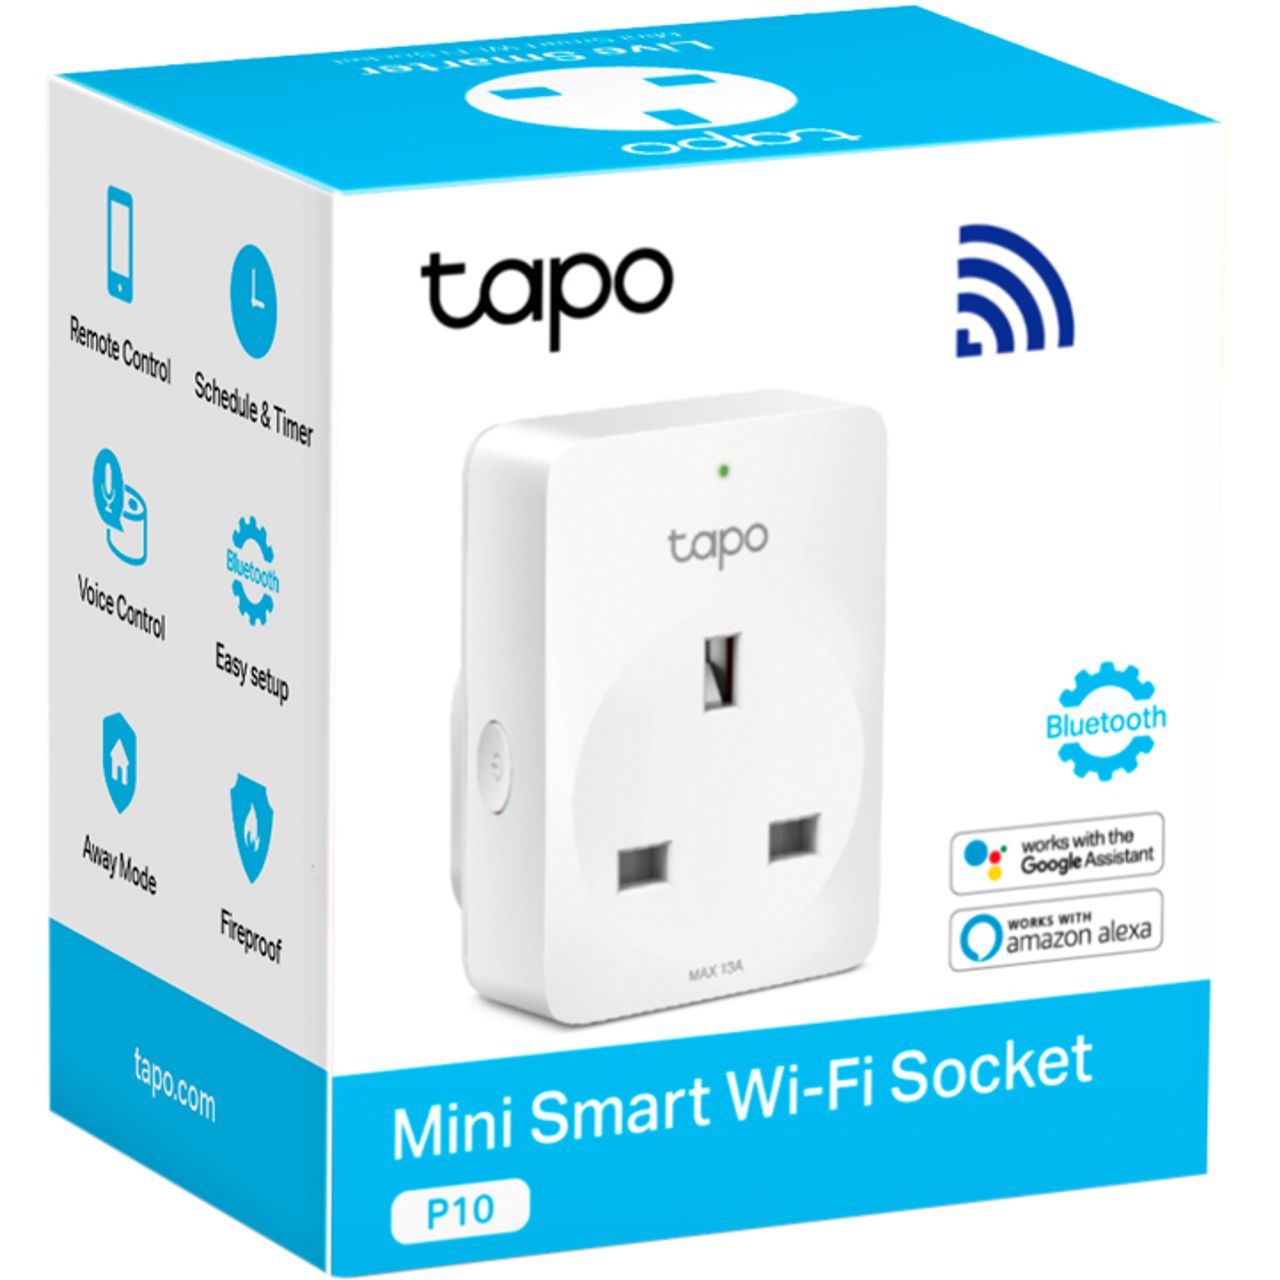 TP-Link Tapo P100 Mini Wi-Fi Smart Plug Review